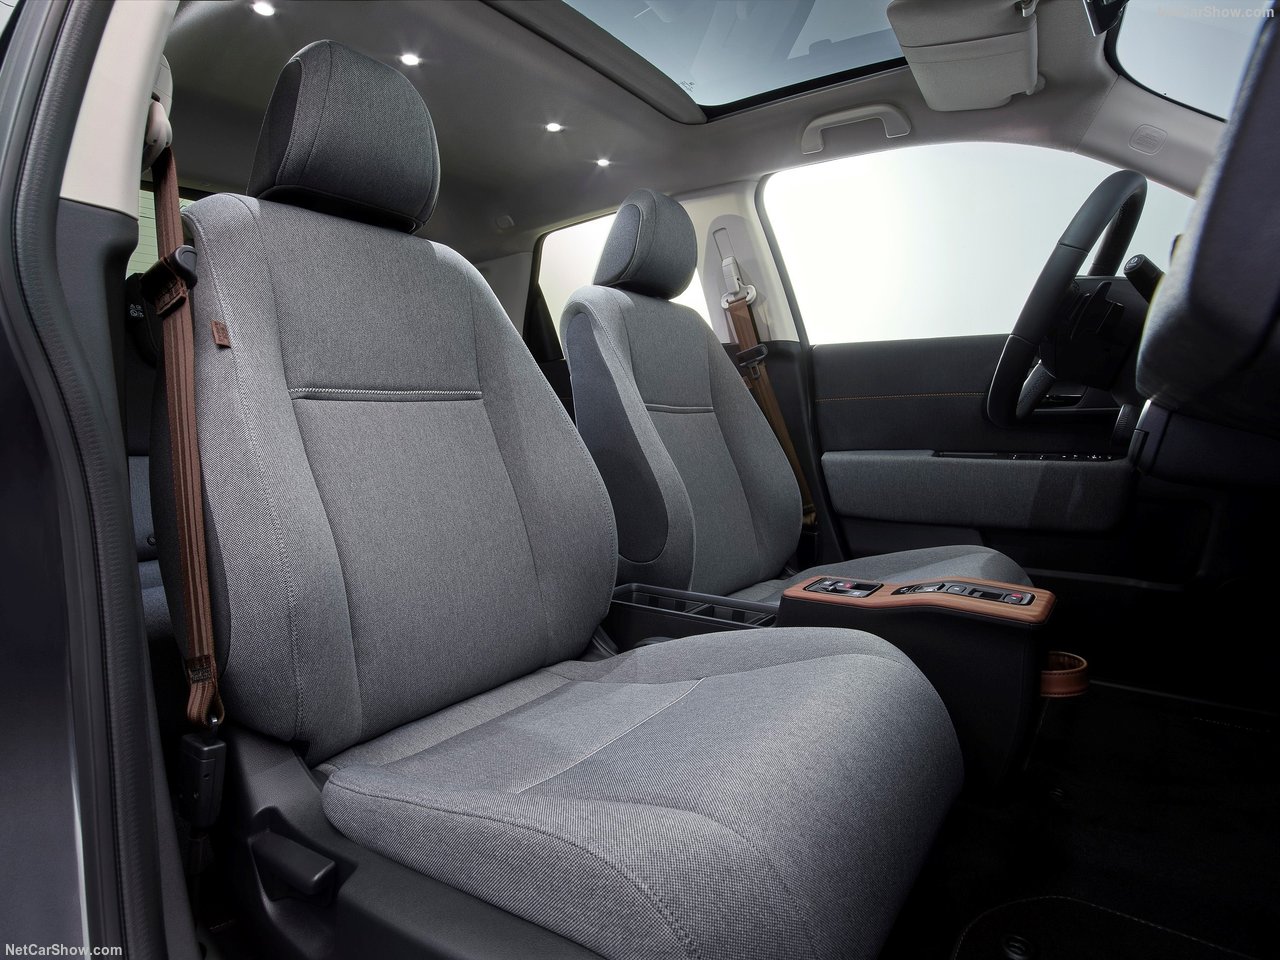 Honda E interior - Front Seats